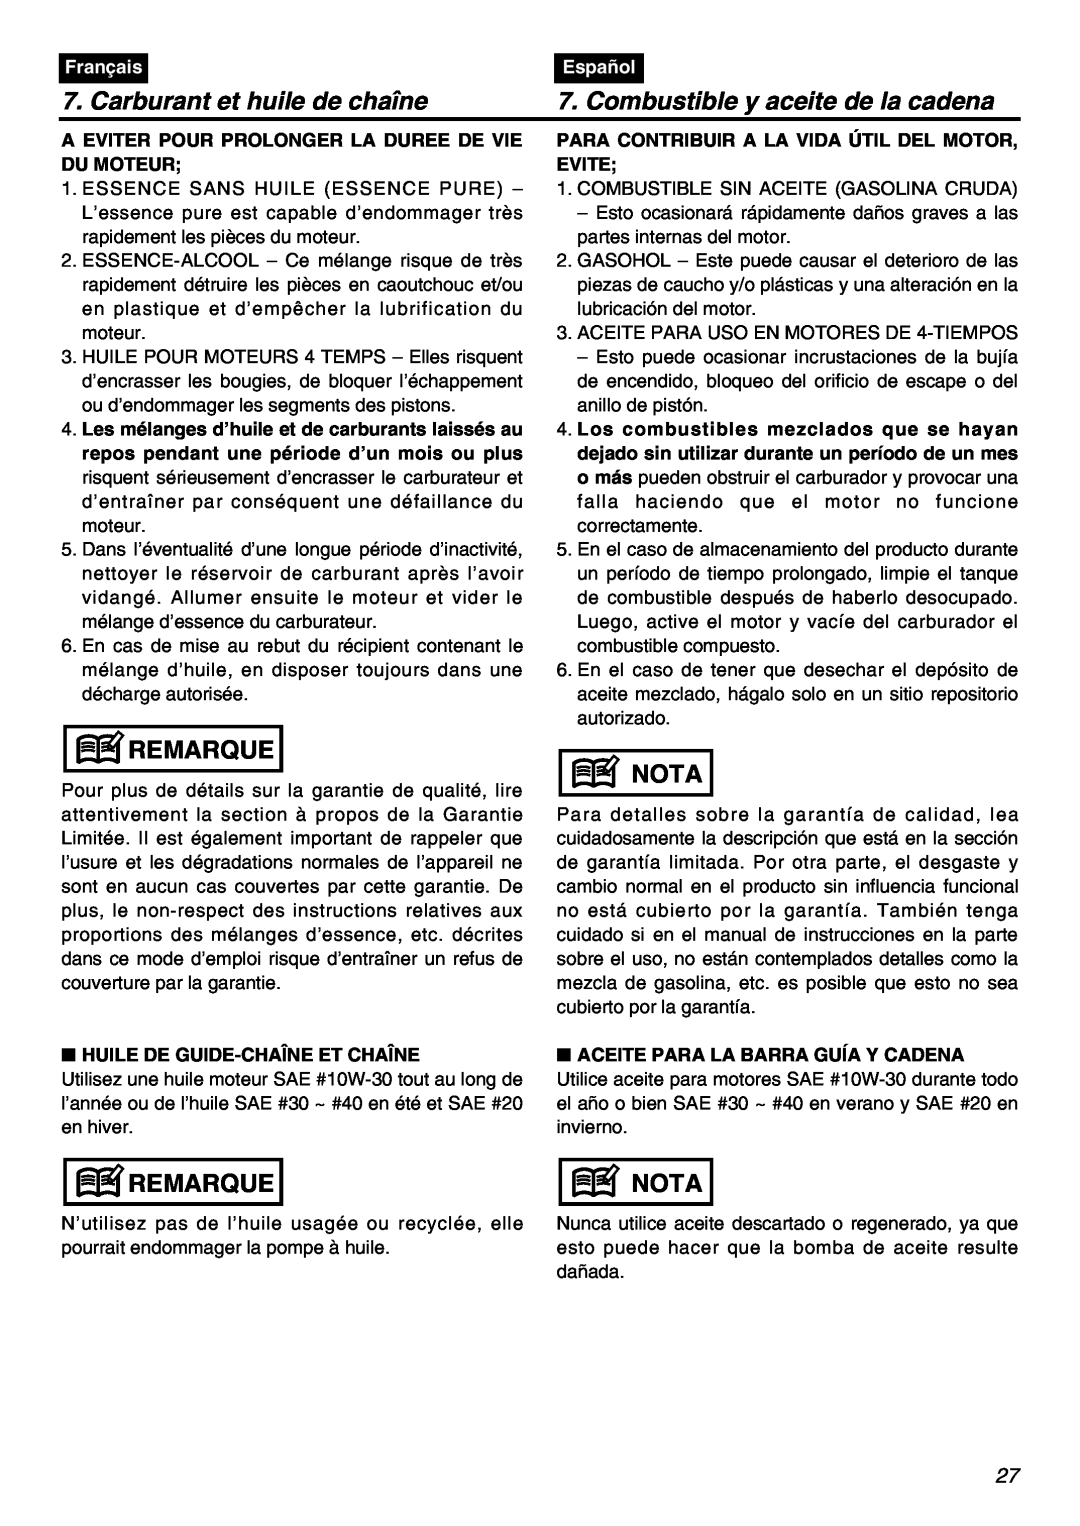 RedMax GZ400 manual Carburant et huile de chaîne, Combustible y aceite de la cadena, Remarque, Nota, Français, Español 